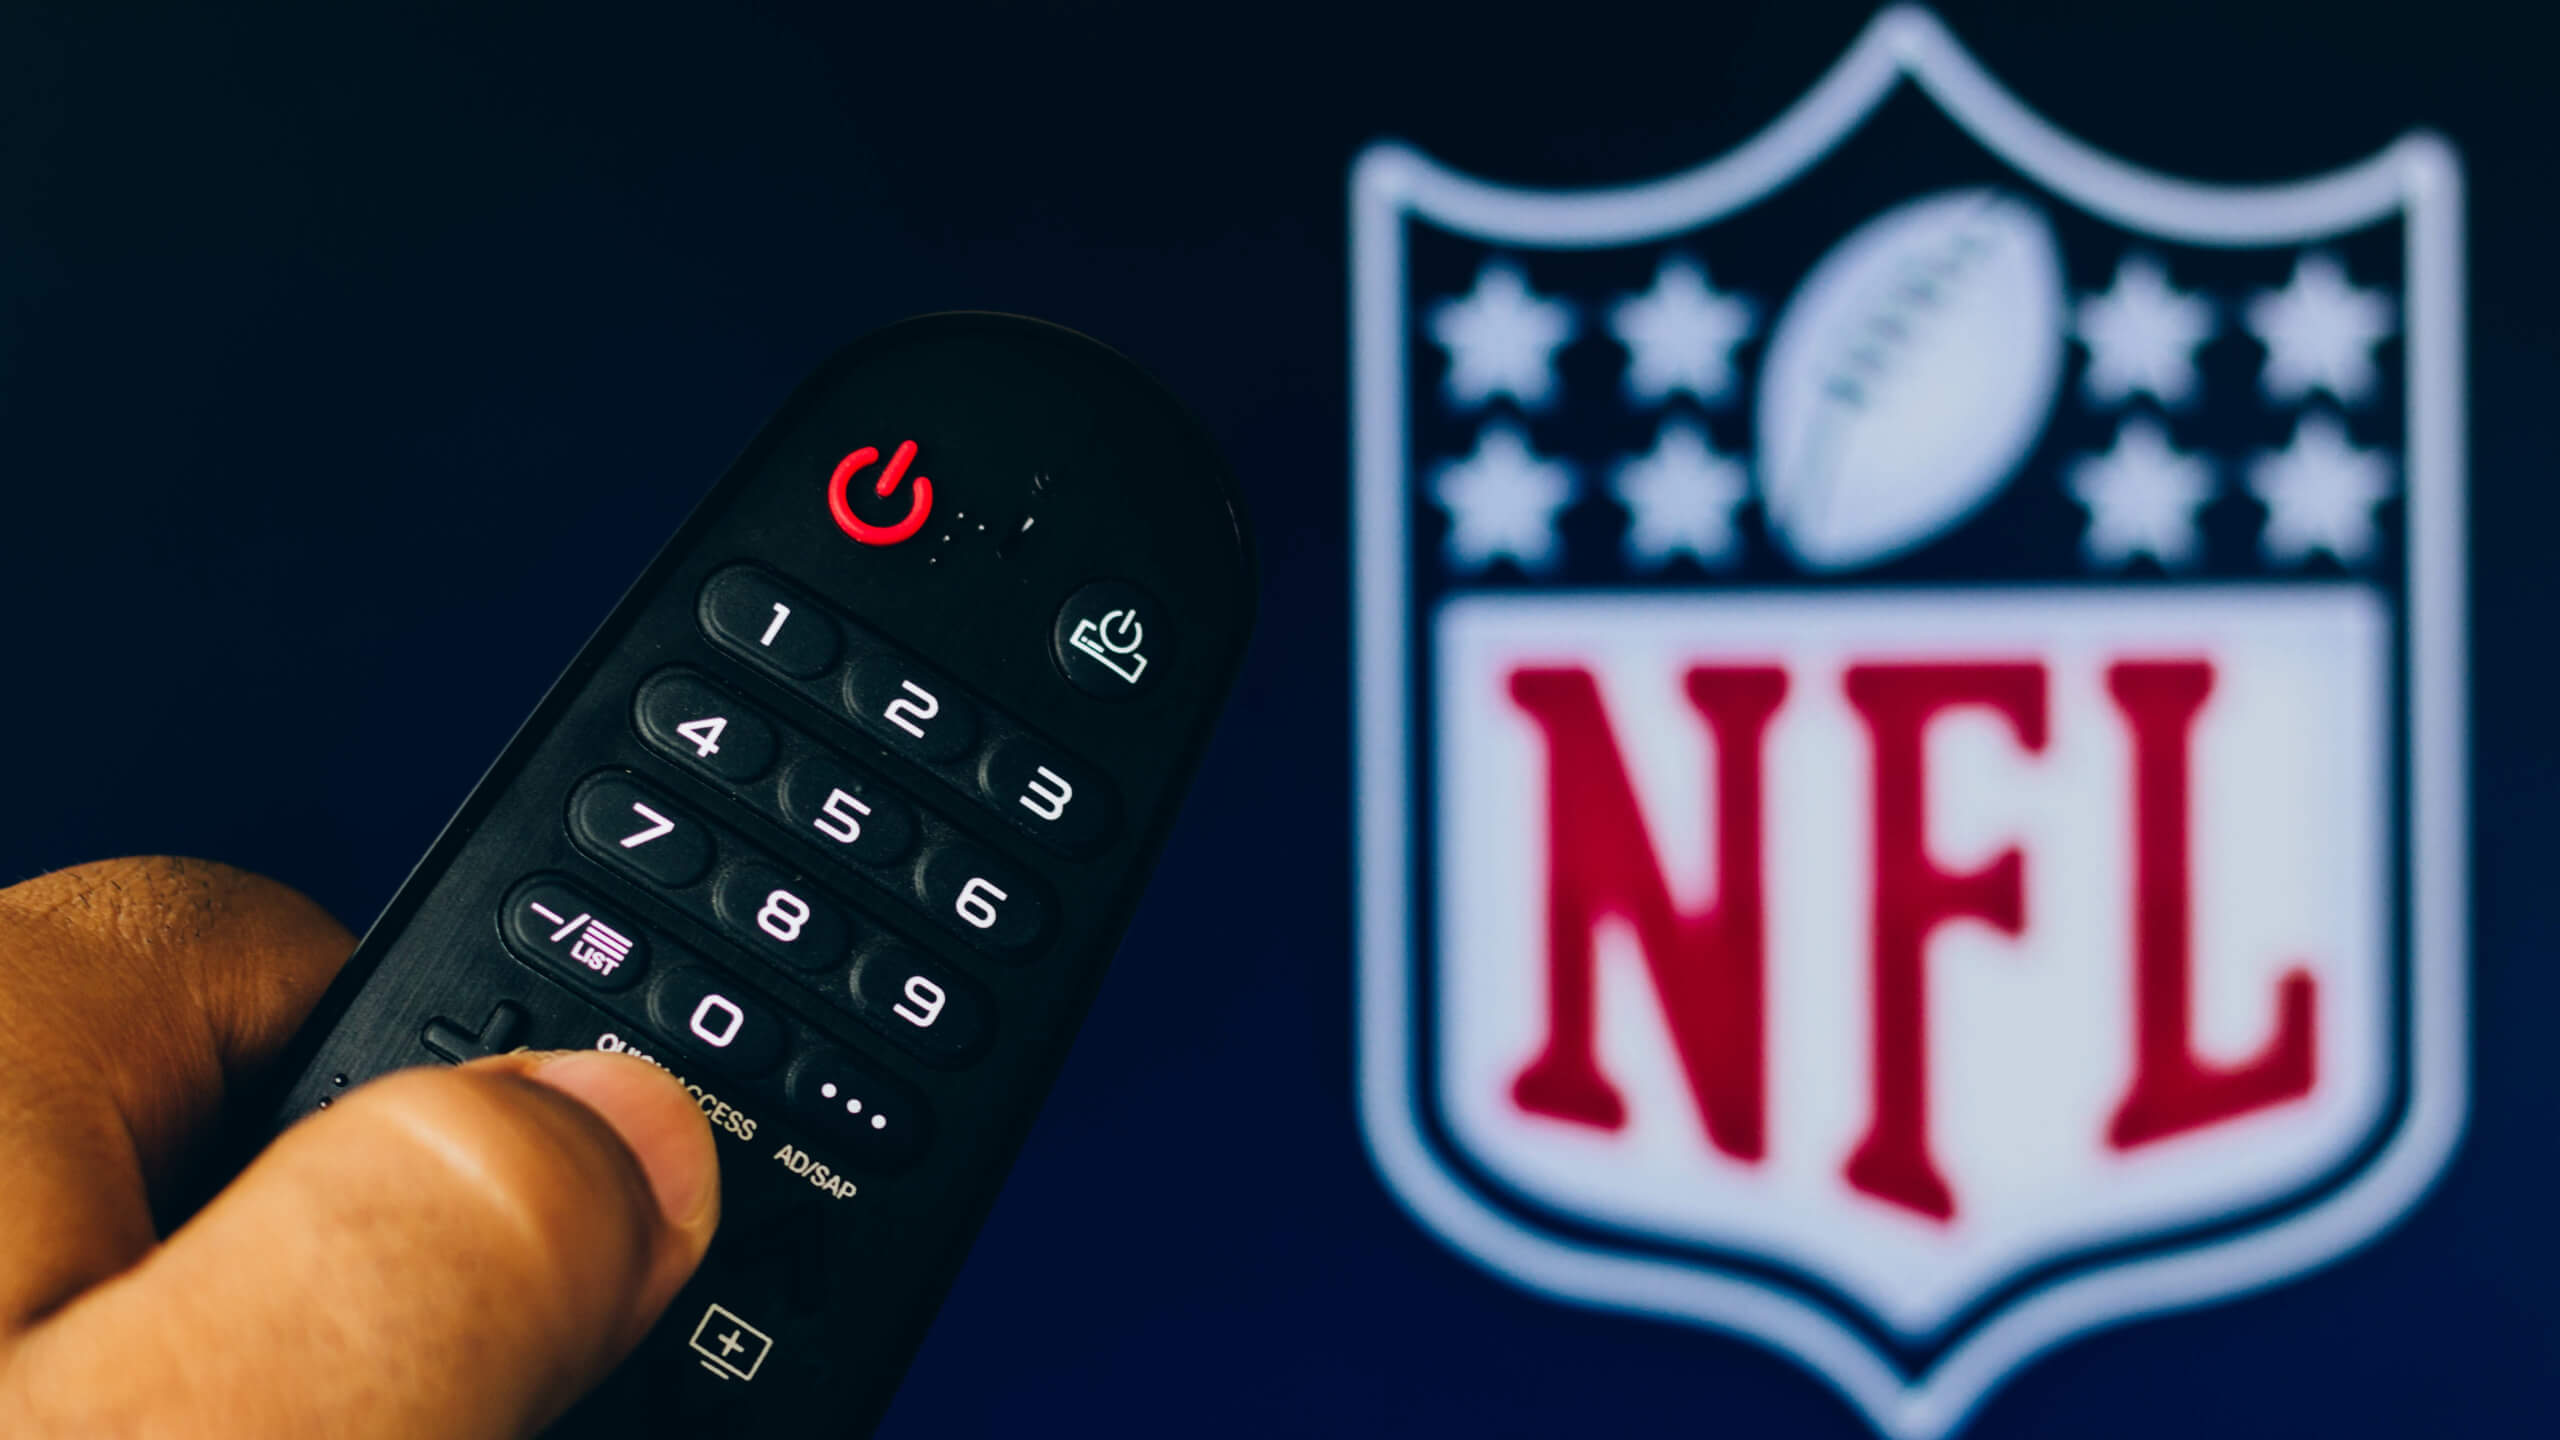 How To Watch NFL RedZone Live Every Sunday 2023